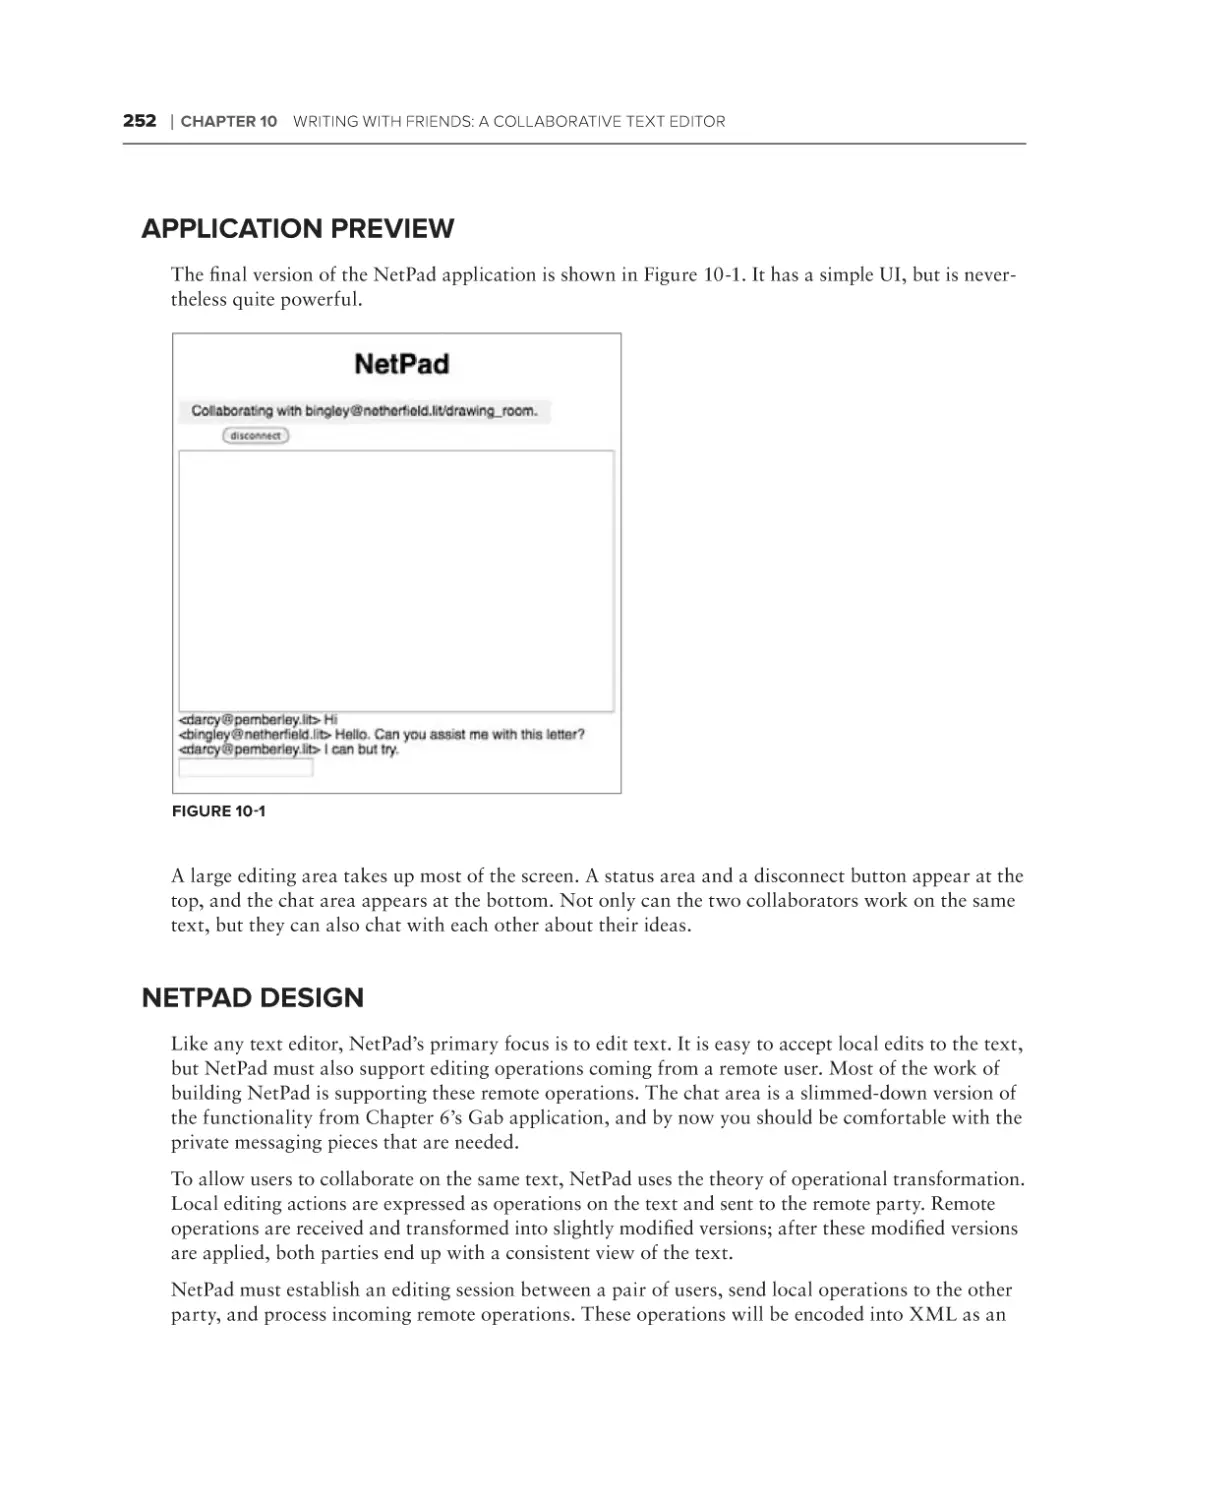 Application Preview
NetPad Design